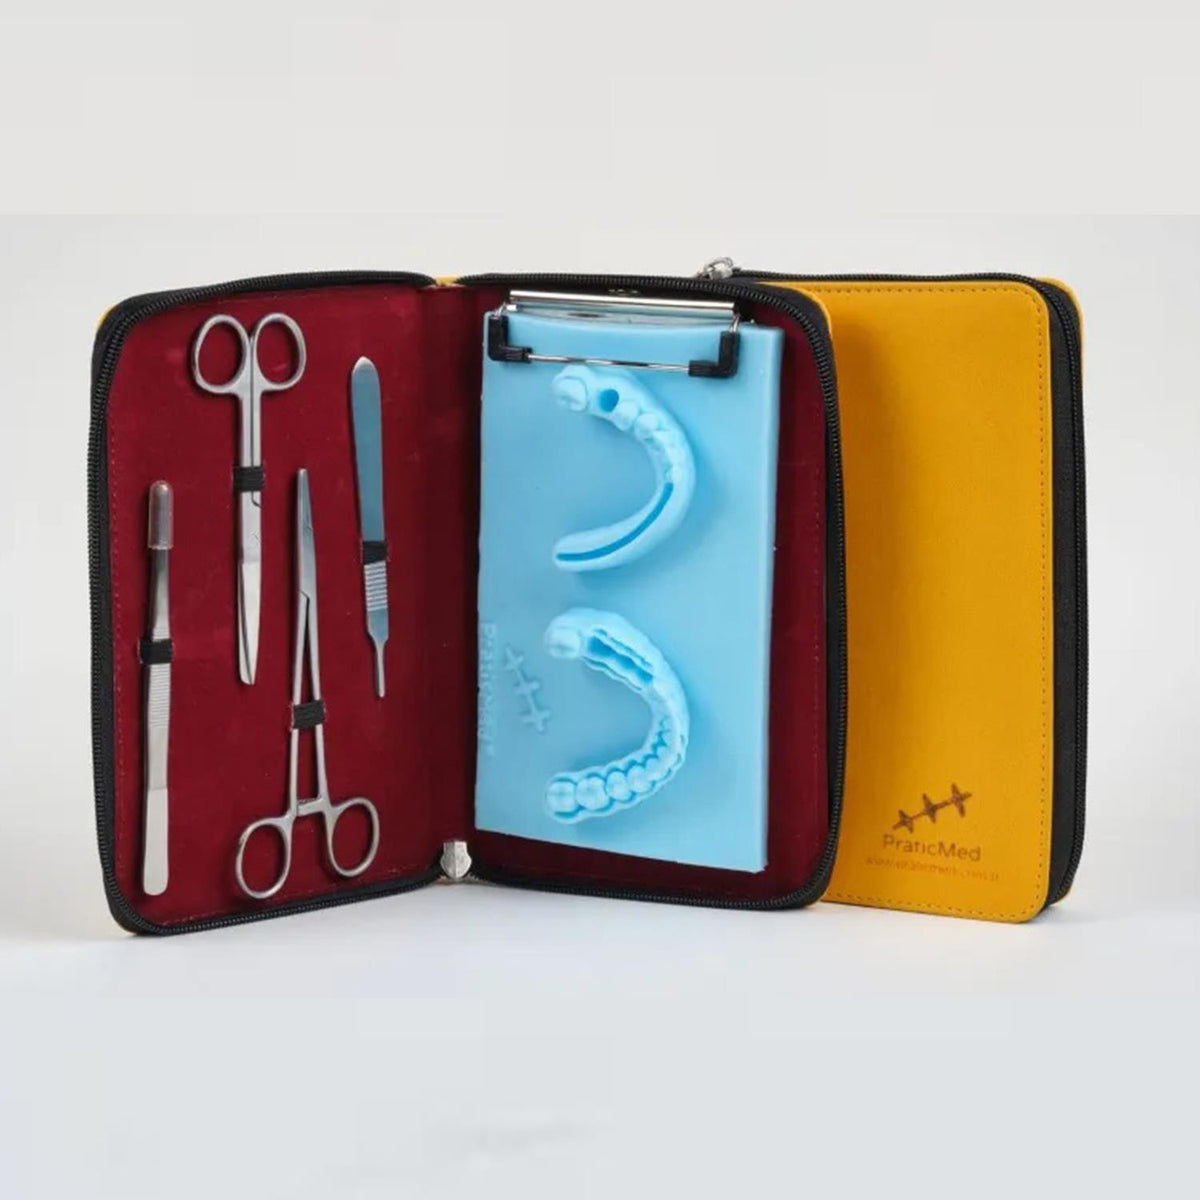 DentrealStore - Praticmed Dentistry Suture, Flap Closure Silicoe Set - Bag Type Blue